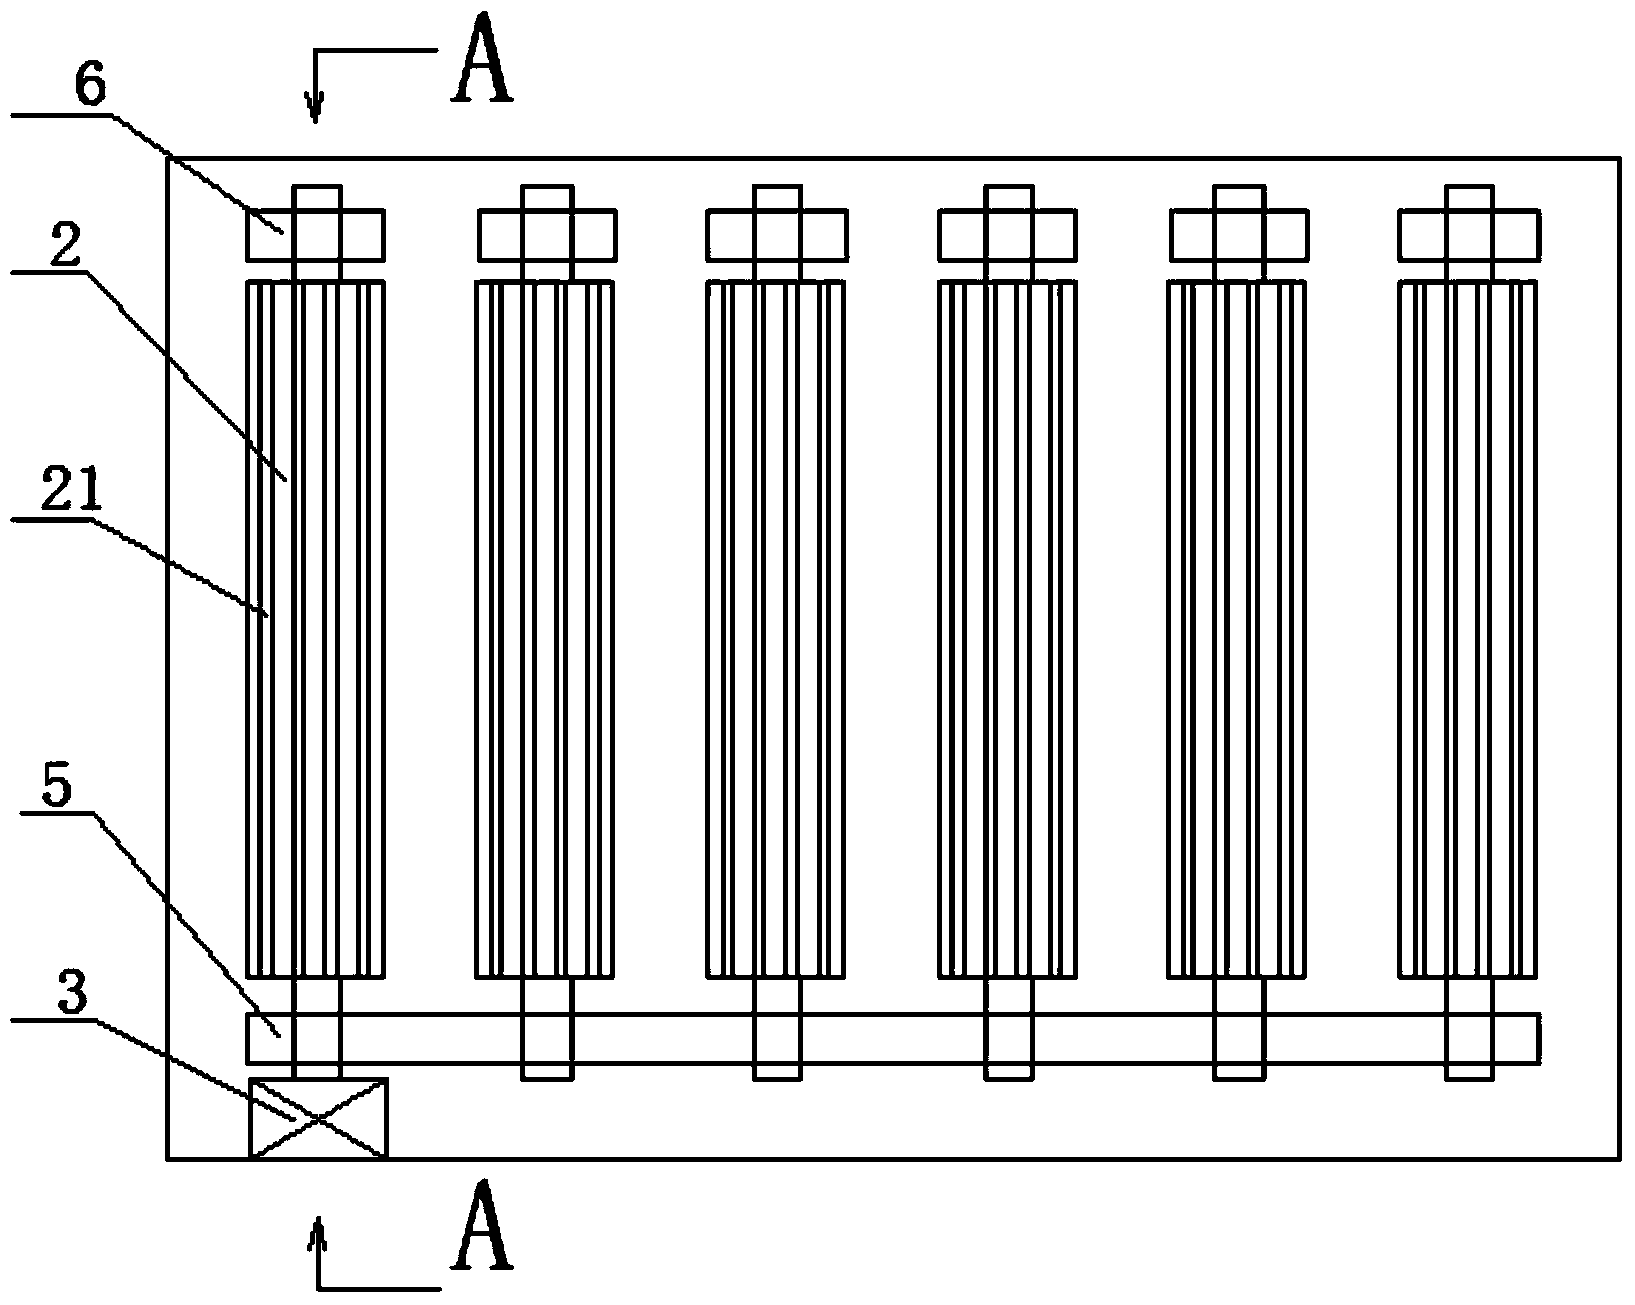 Multi-roller transmission device